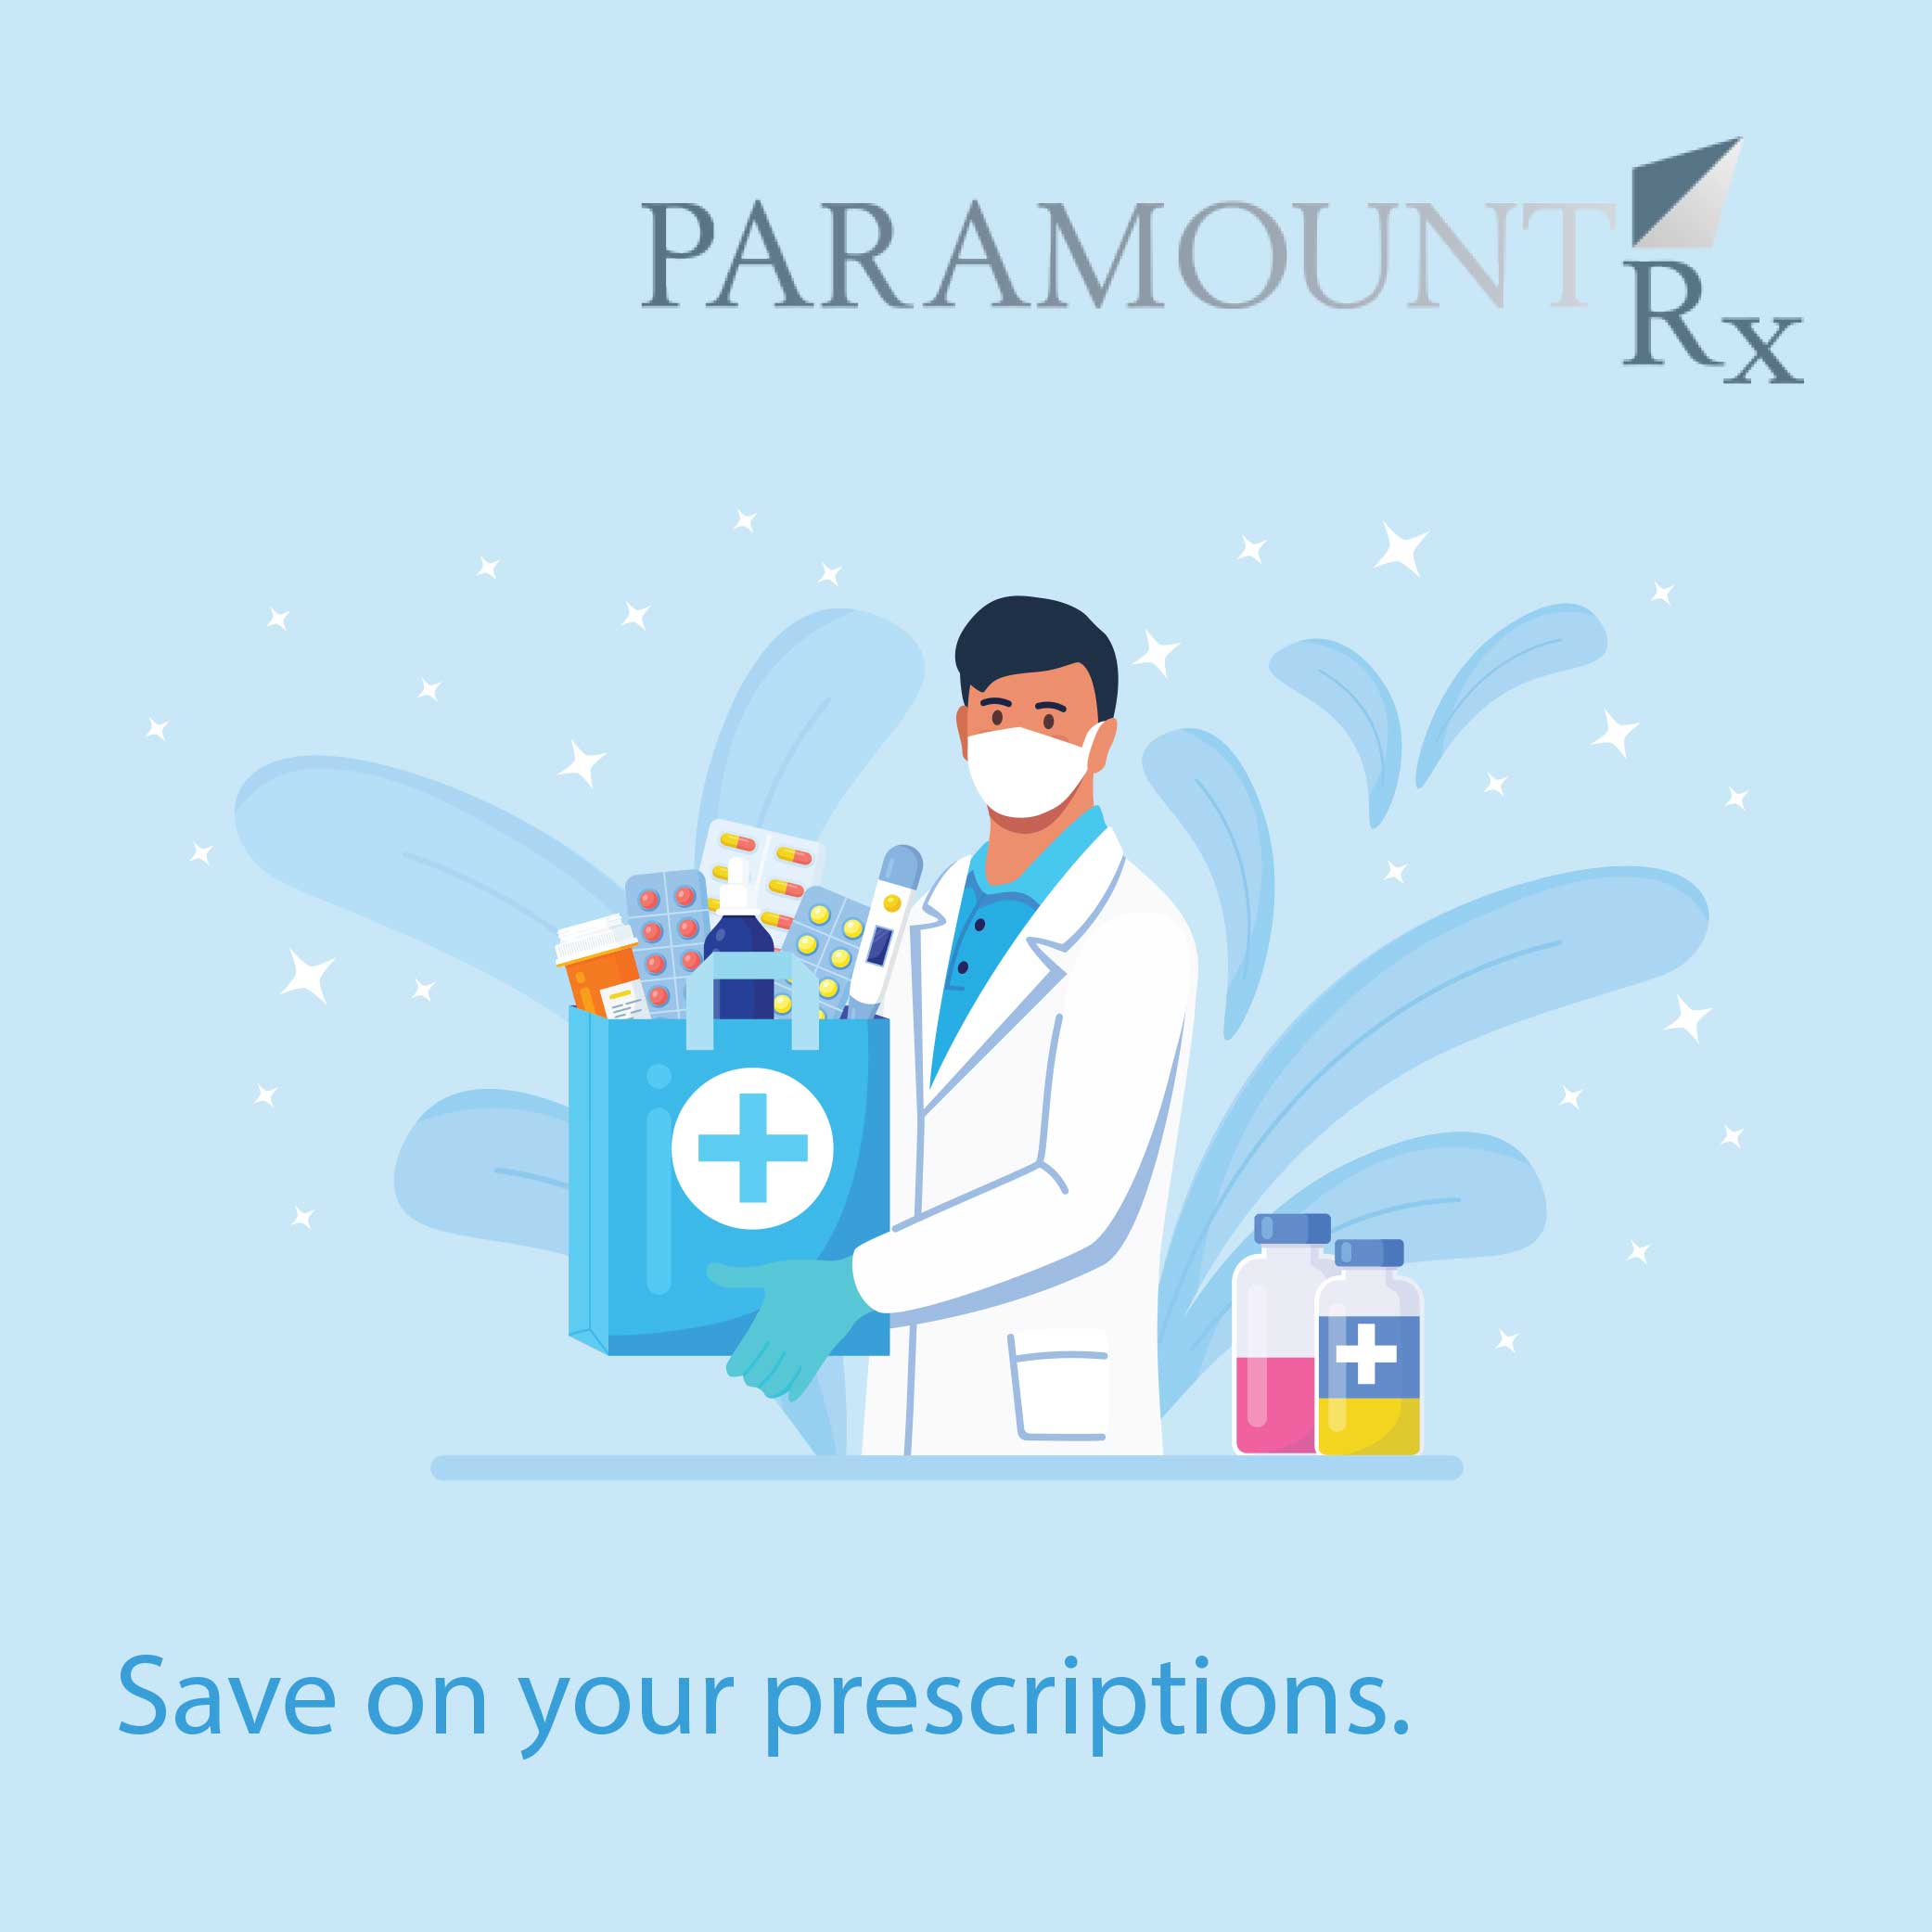 Paramount RX Prescription Discounts - Benefit Boost Subscription Product